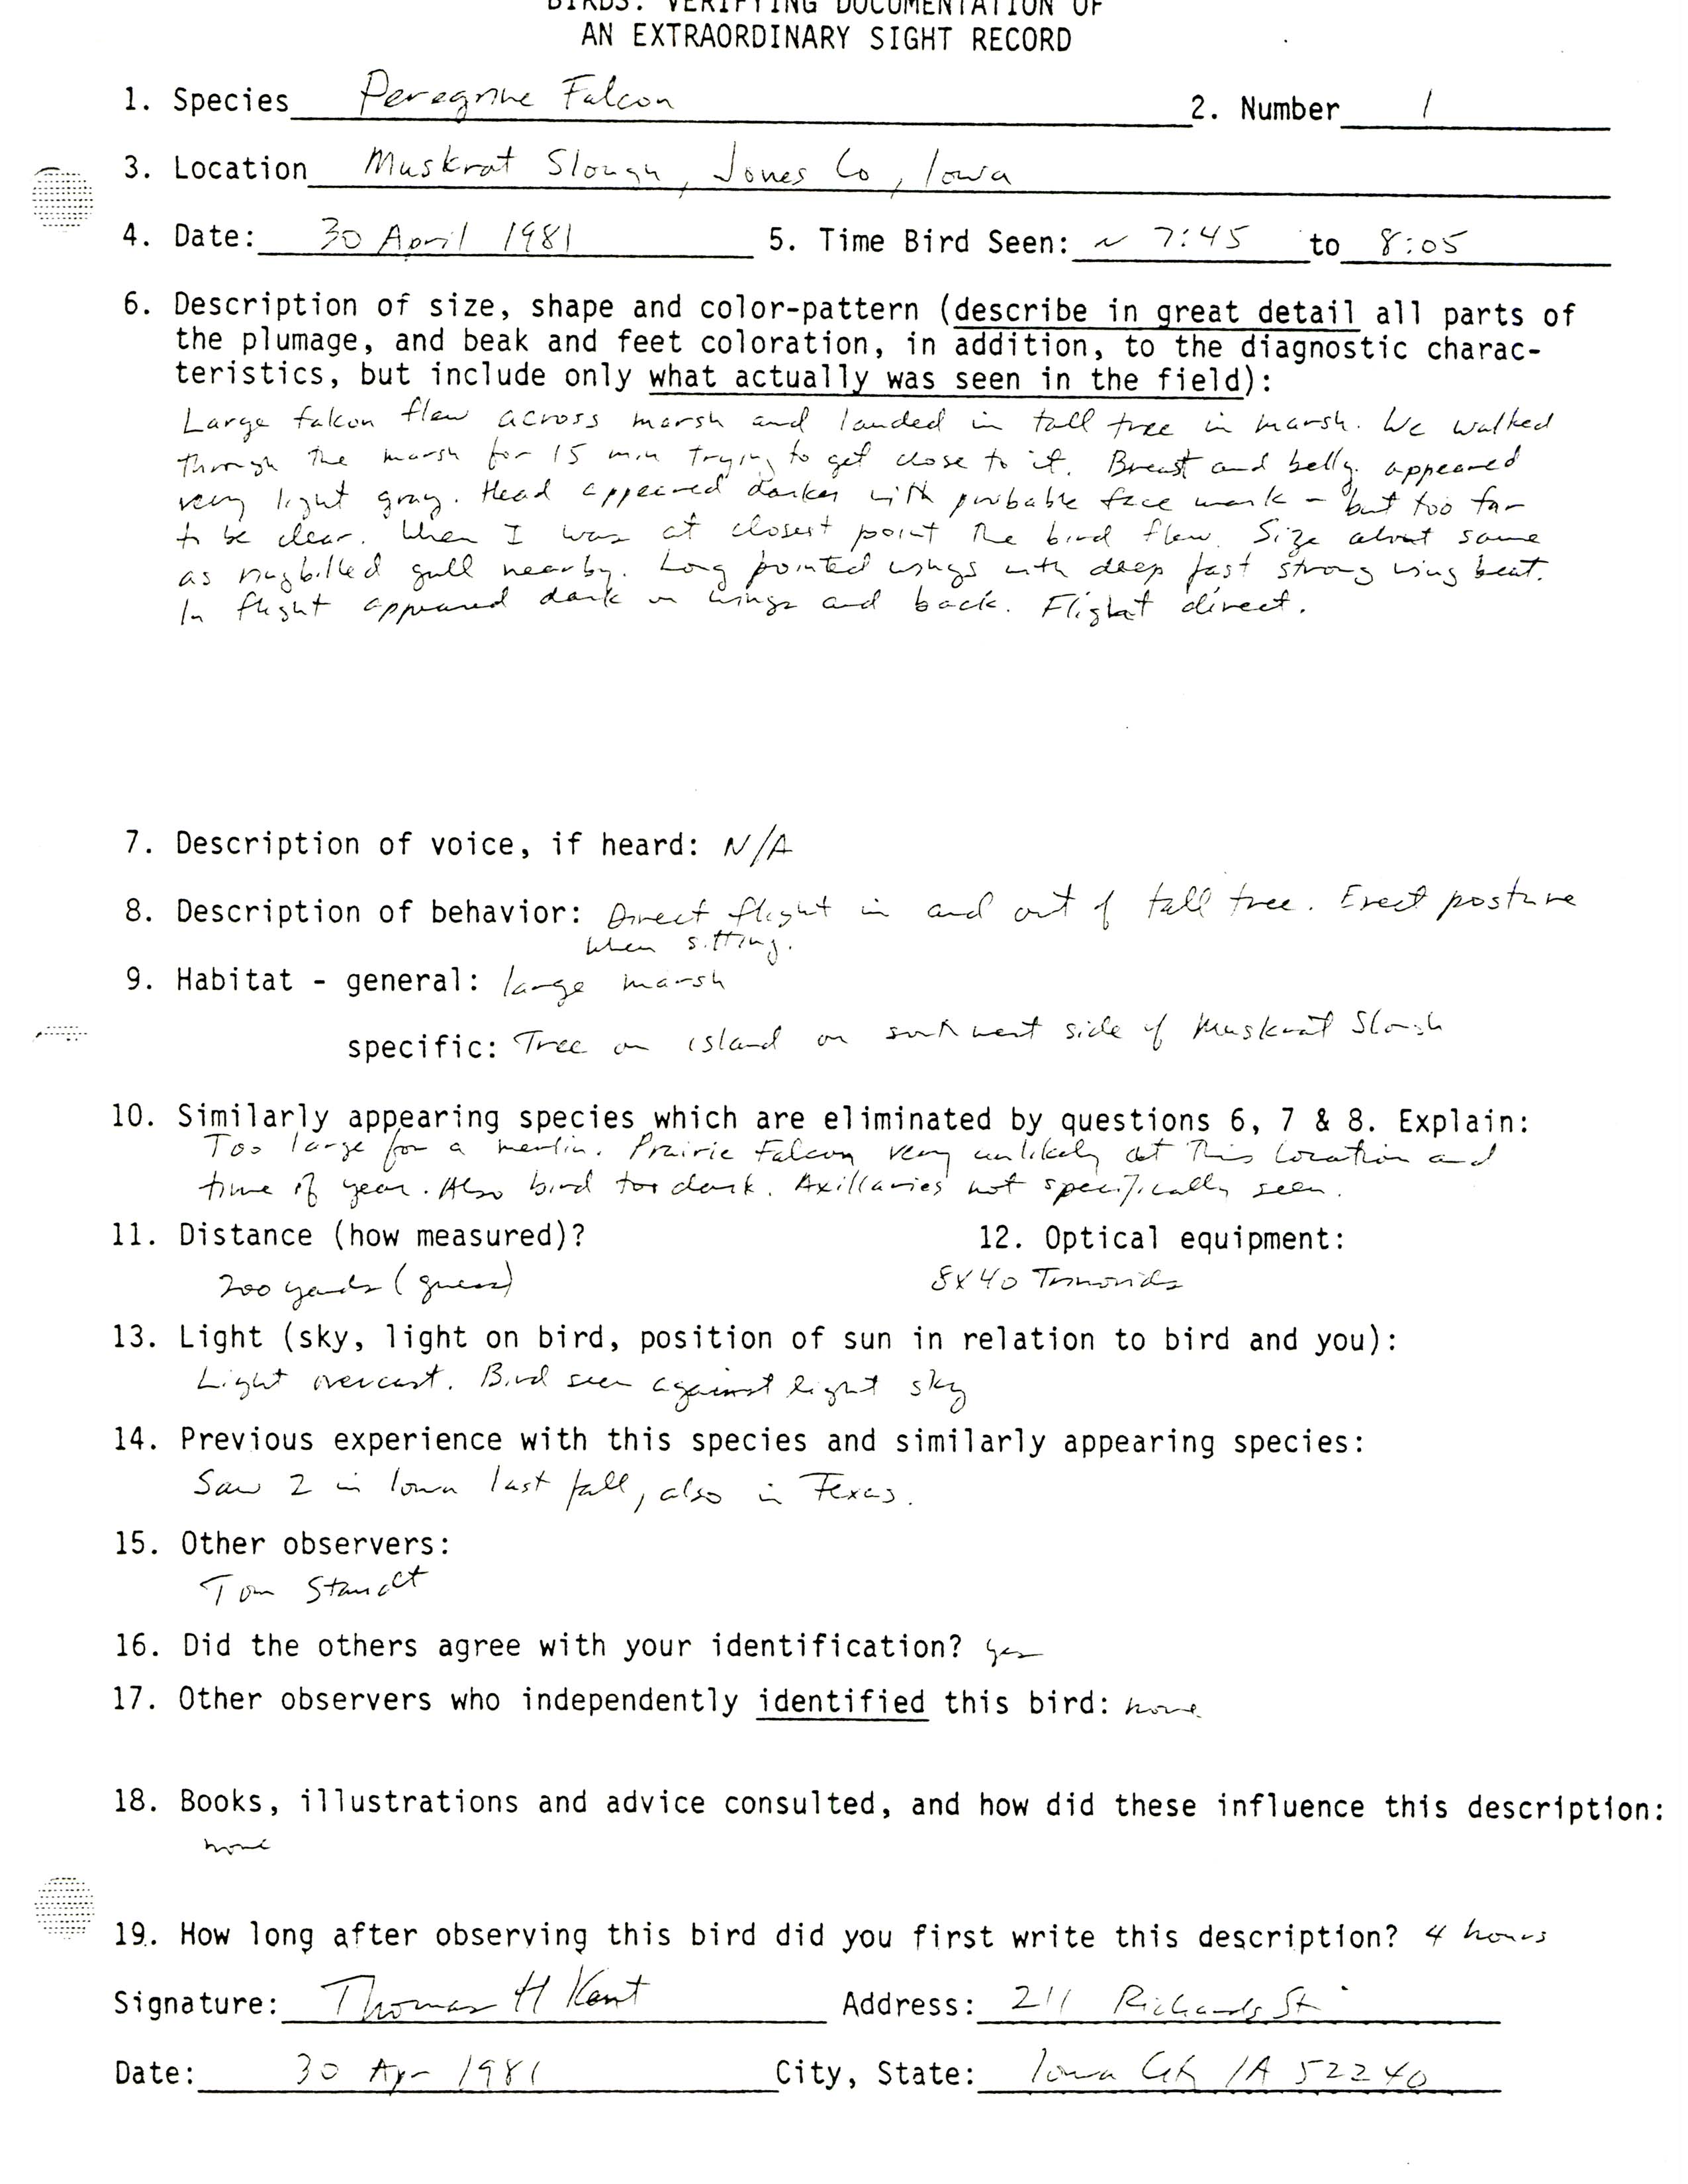 Rare bird documentation form for Peregrine Falcon at Muskrat Slough, 1981